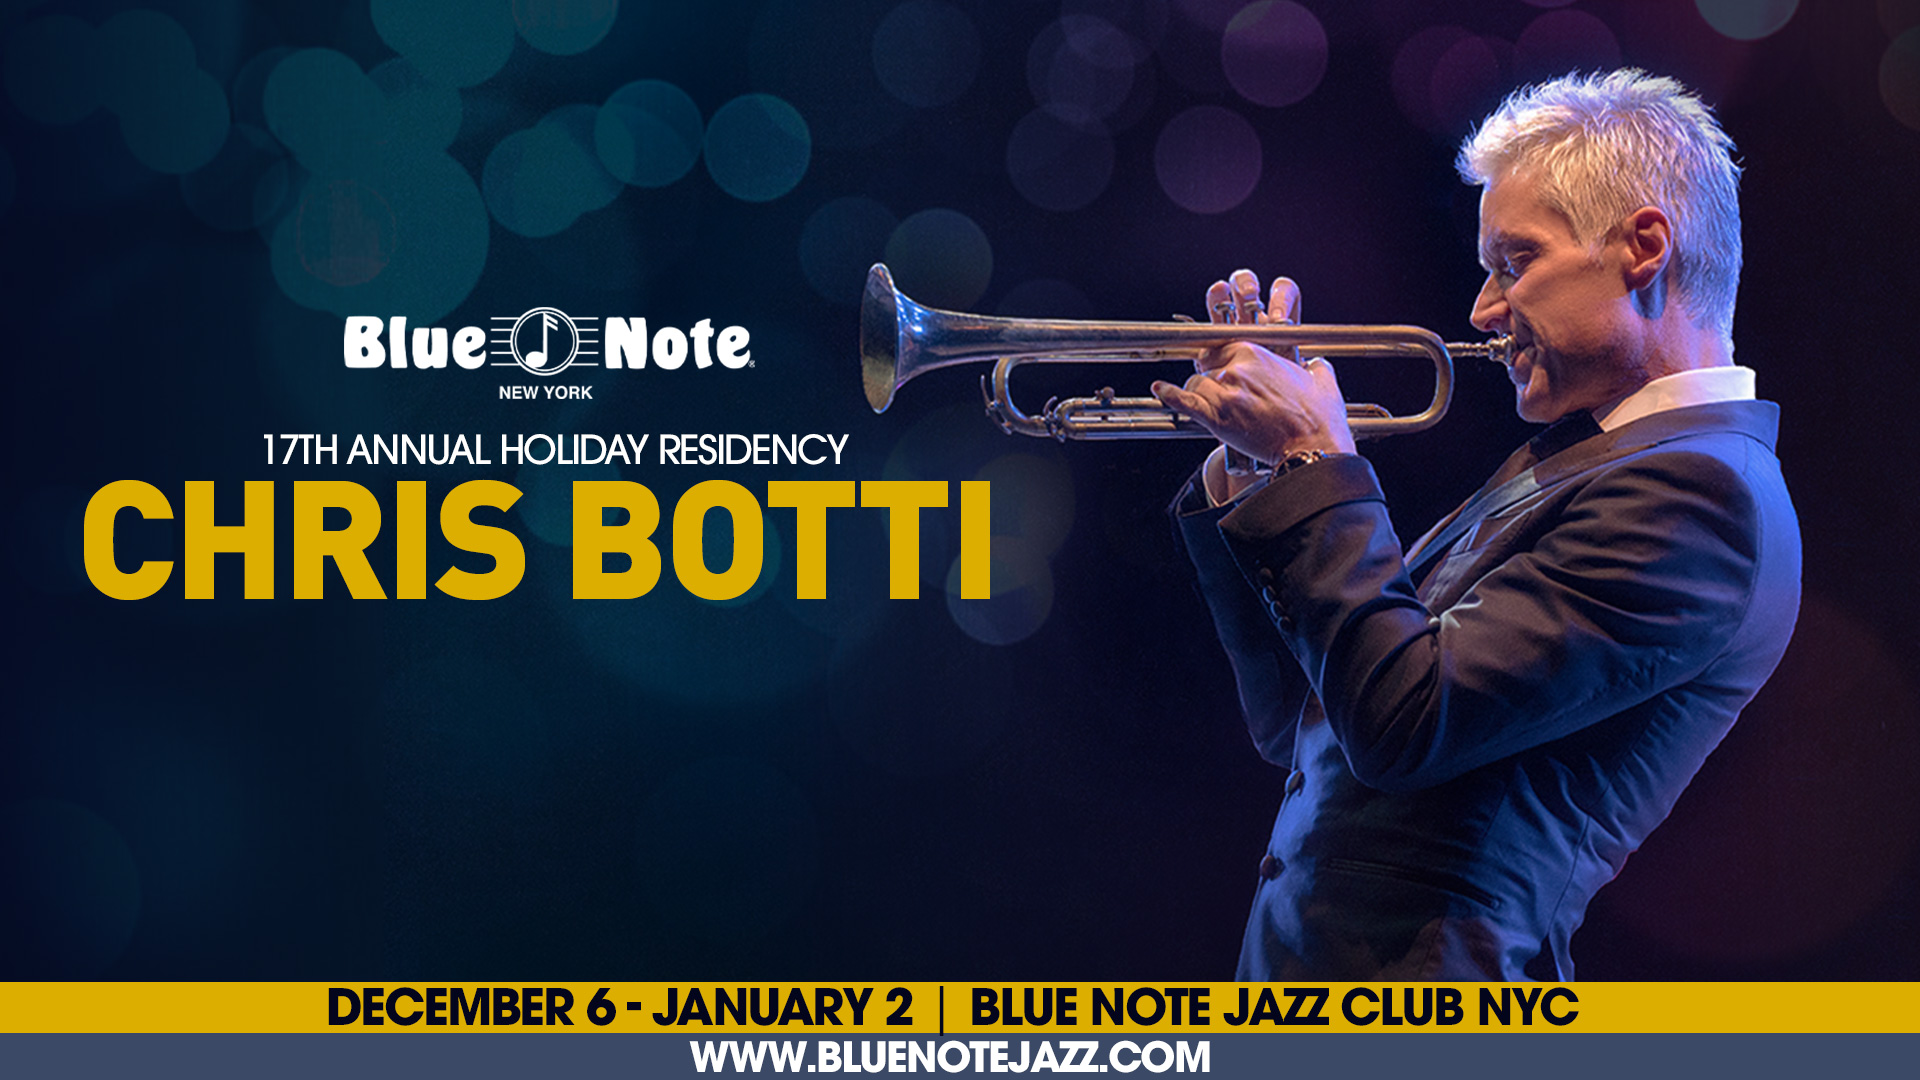 Blue Note Jazz Club Announces Chris Botti Holiday Residency Shore